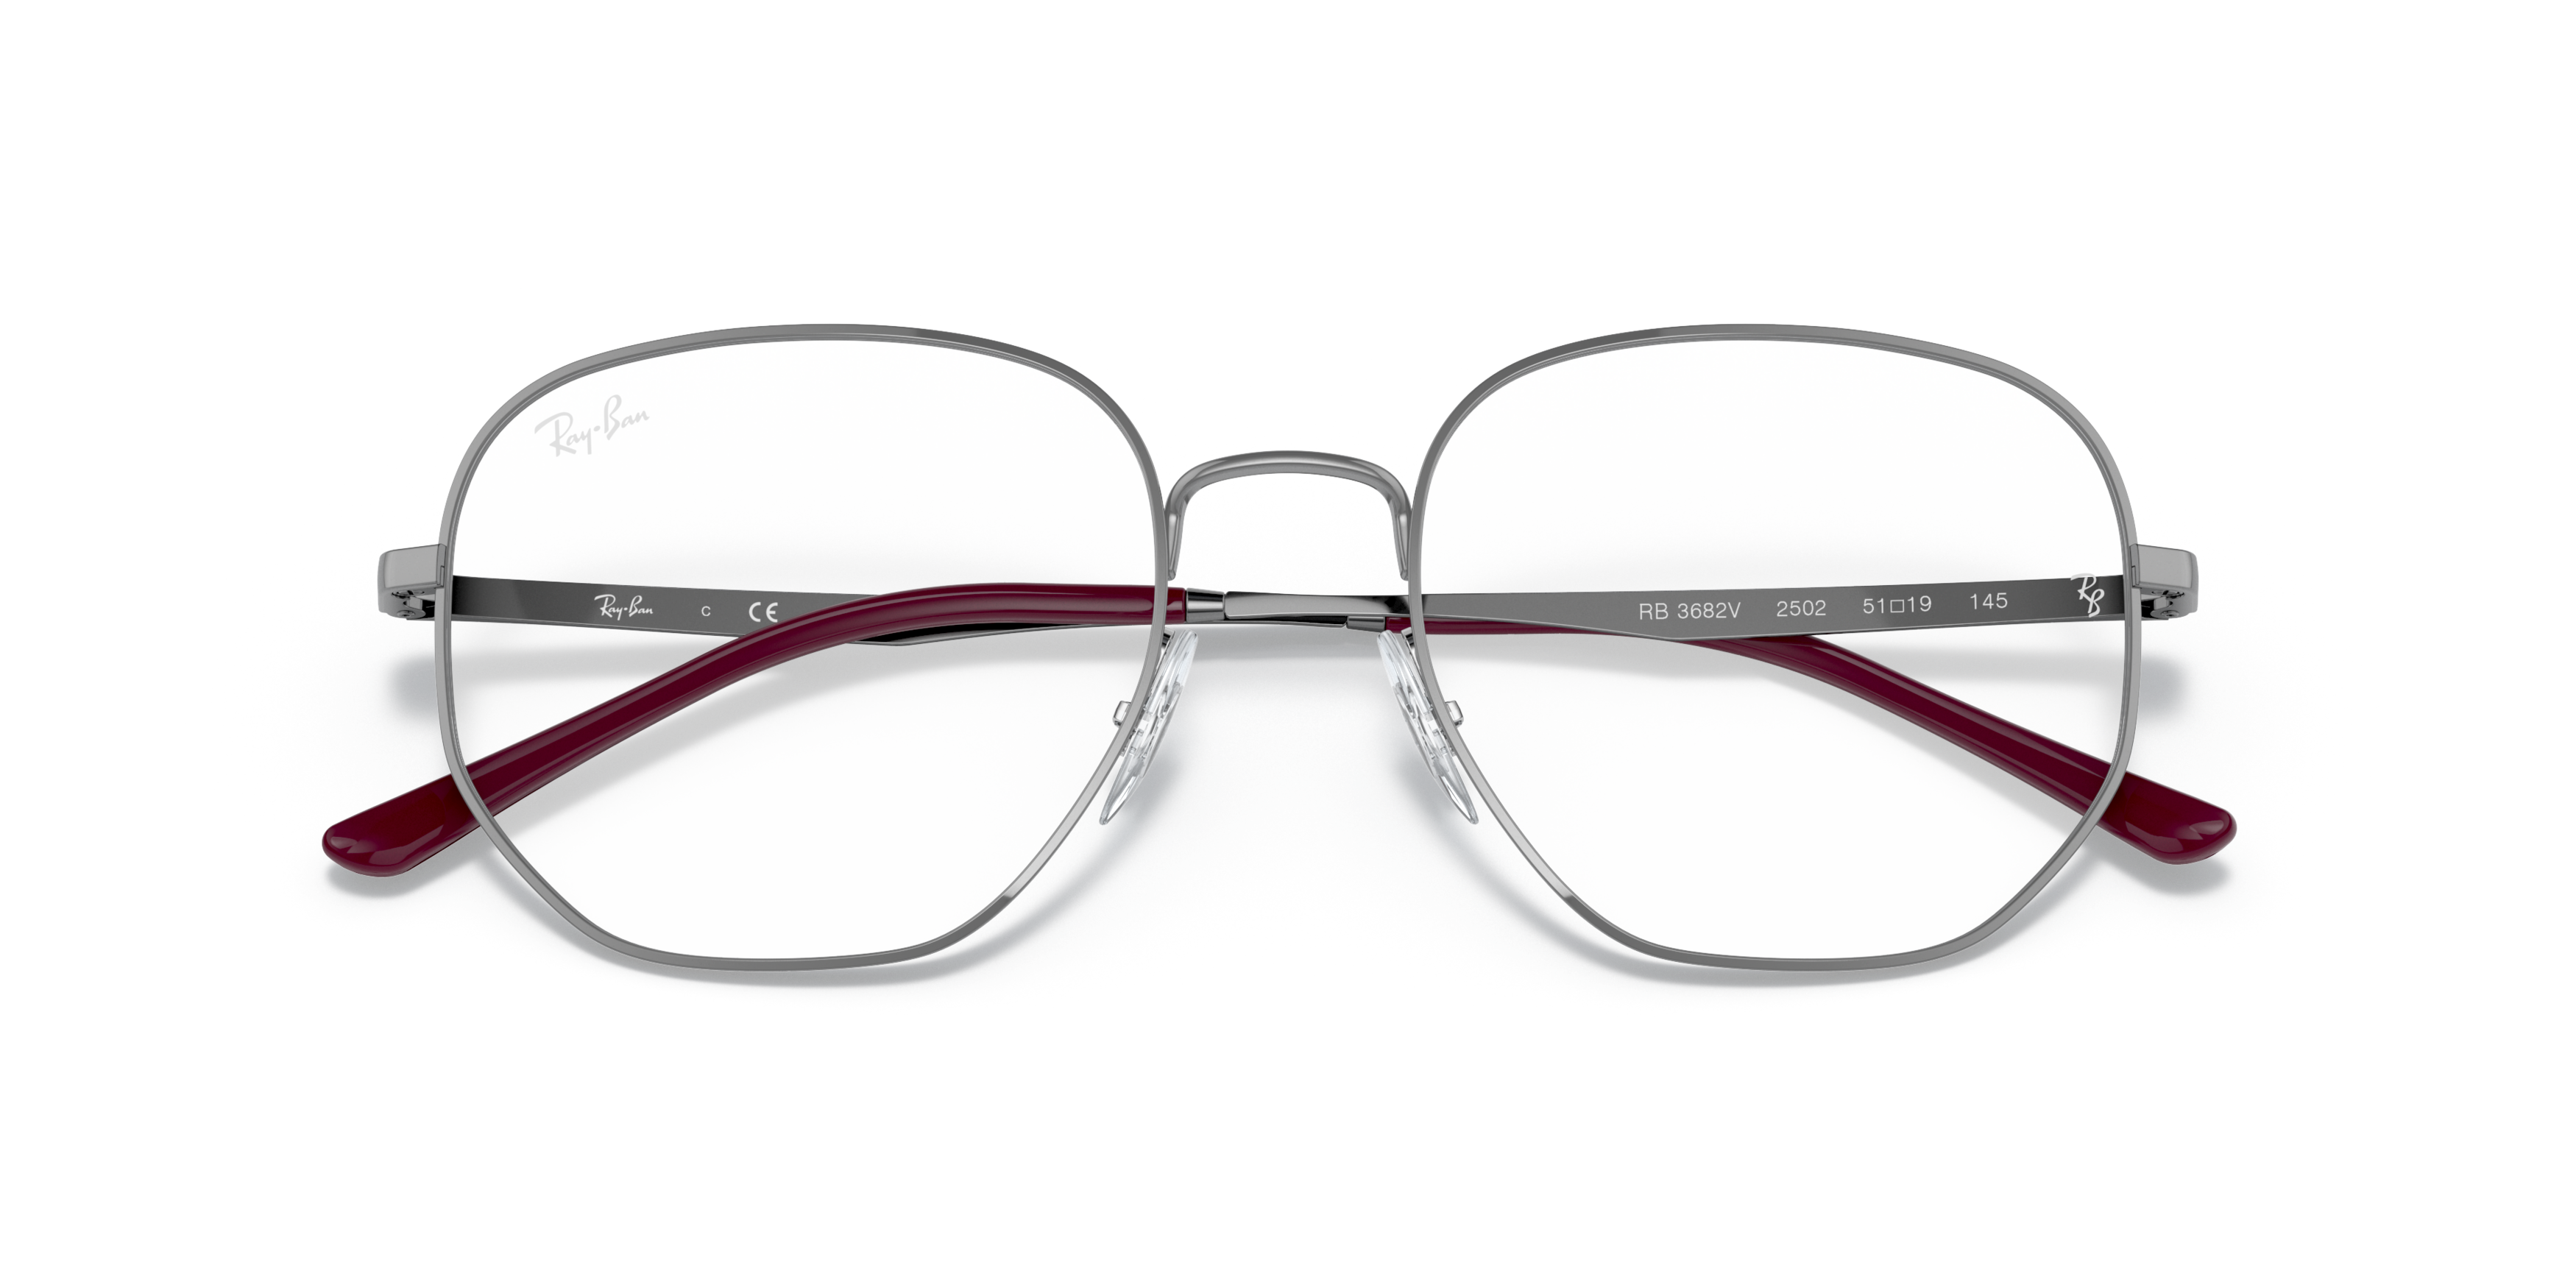 Folded Ray-Ban RX 3682V (2502) Glasses Transparent / Grey